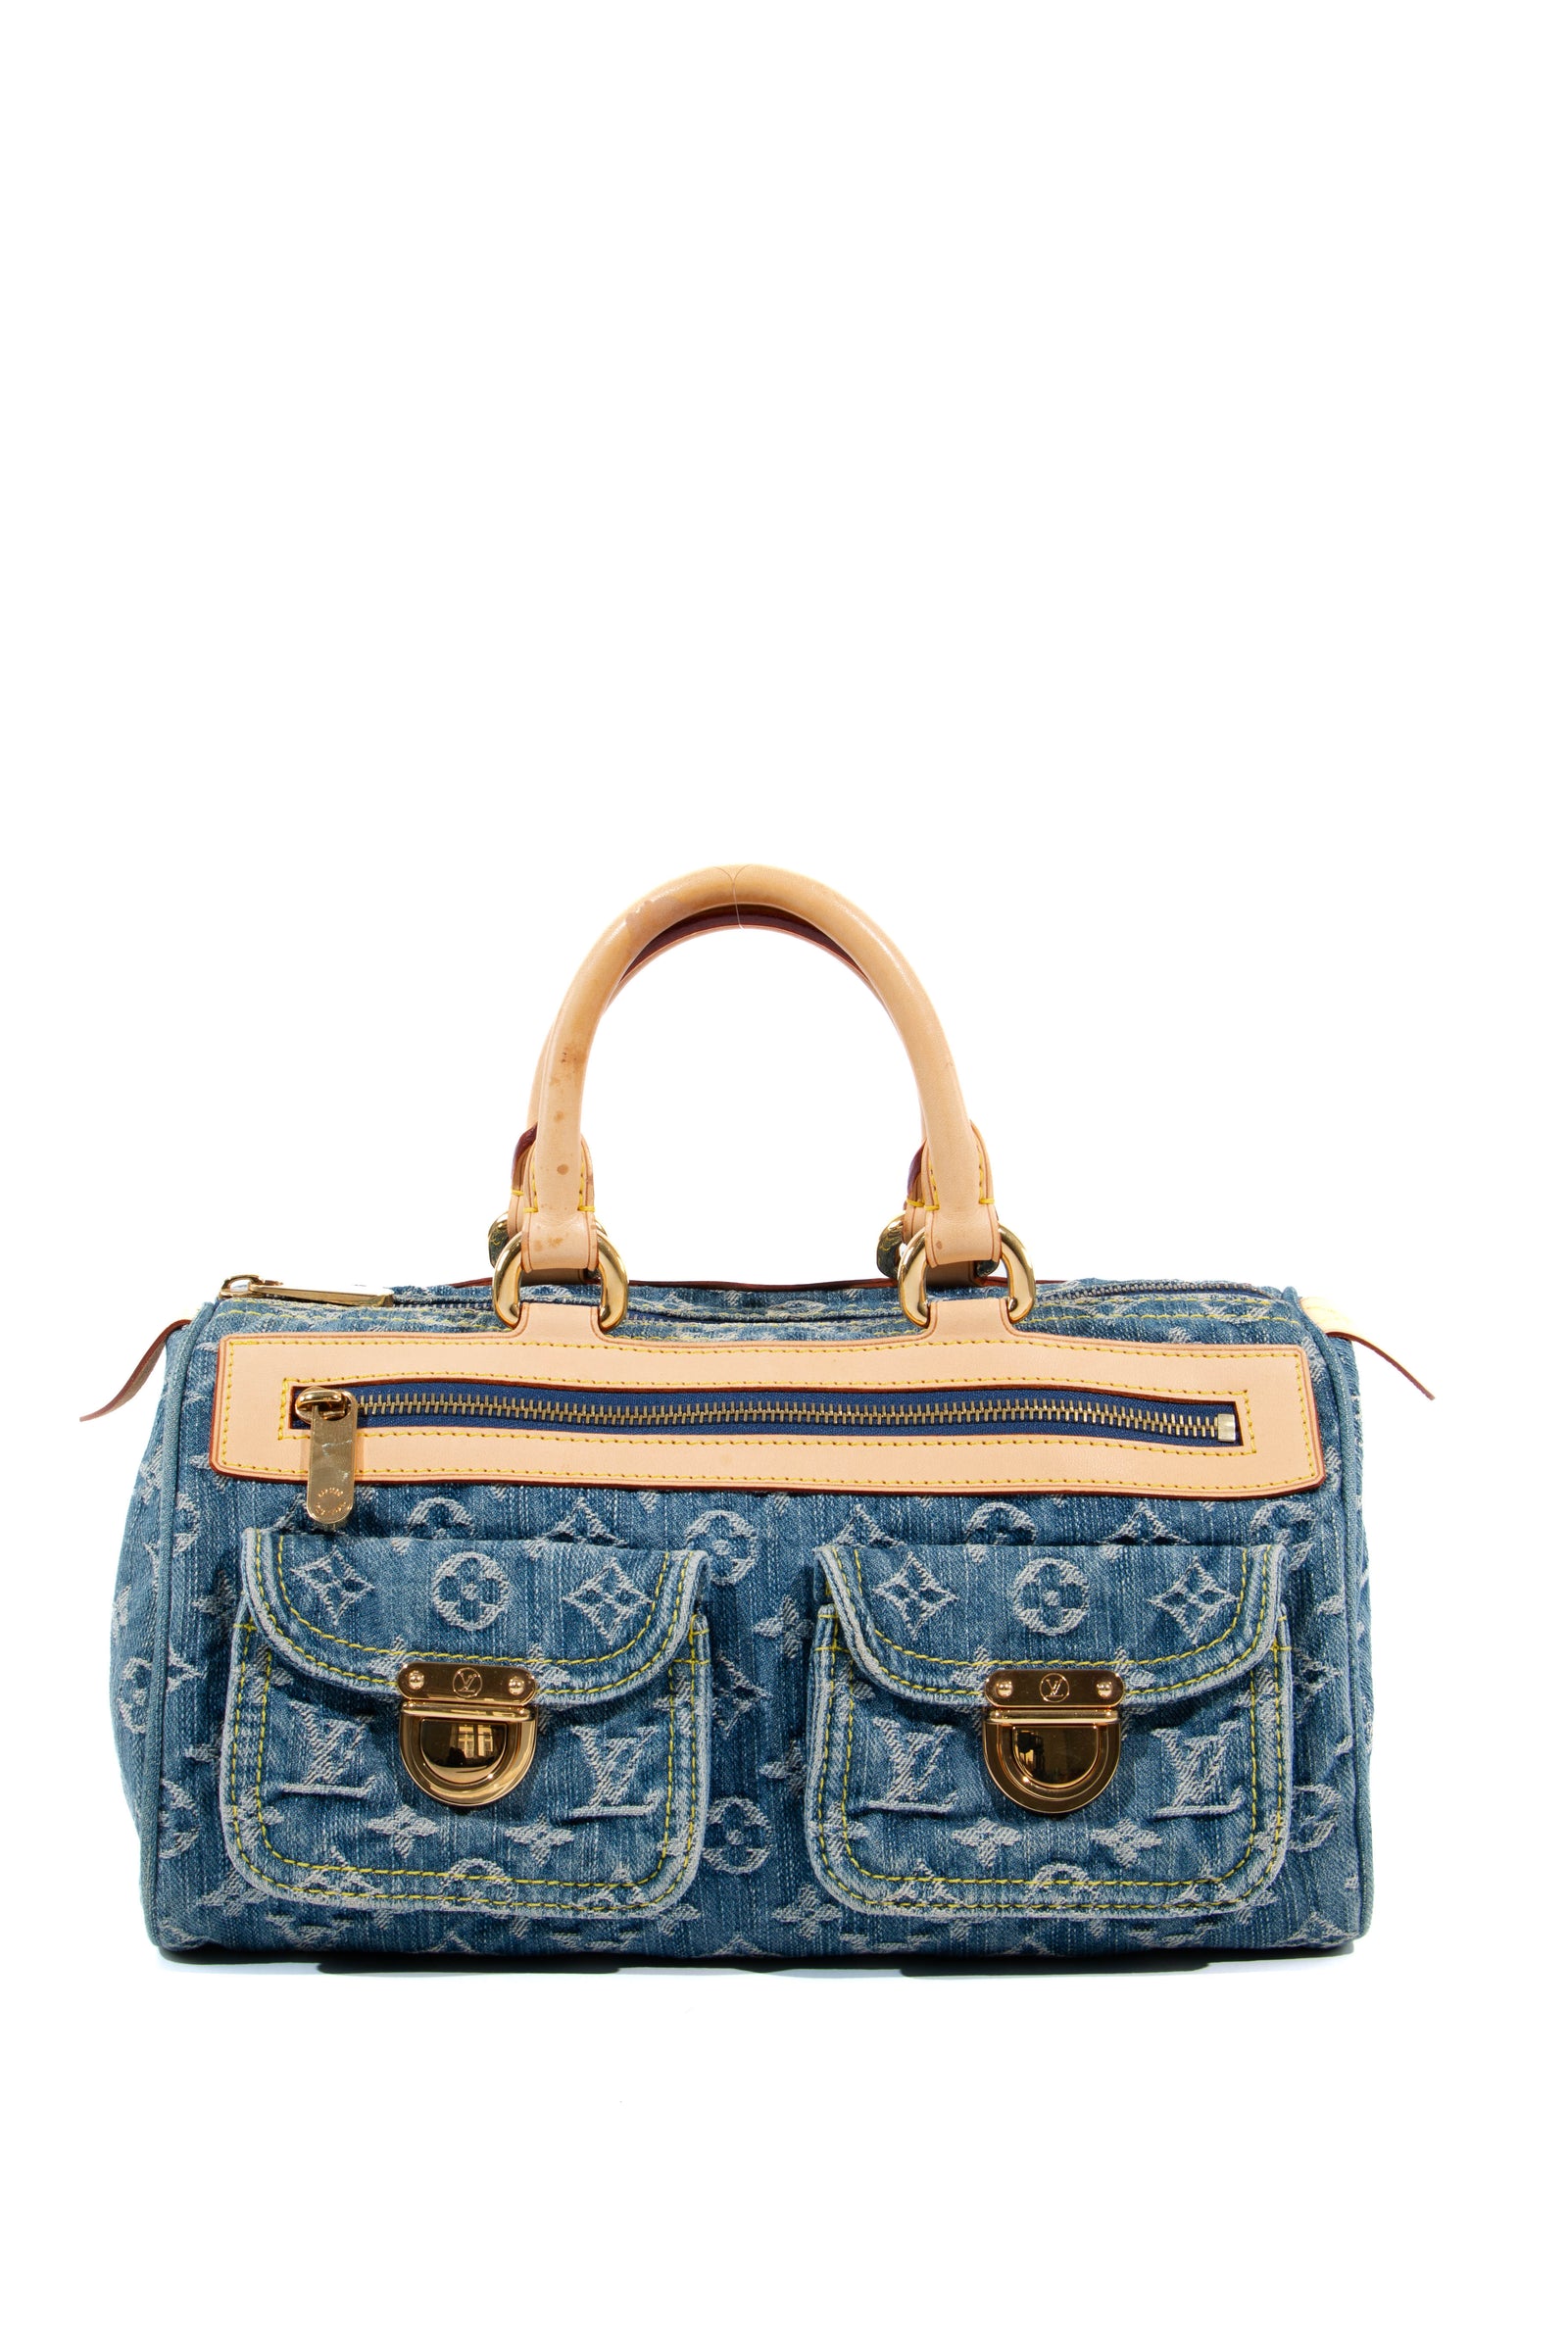 Buy Vintage Louis Vuitton Denim Neo Speedy Bag Online in India 